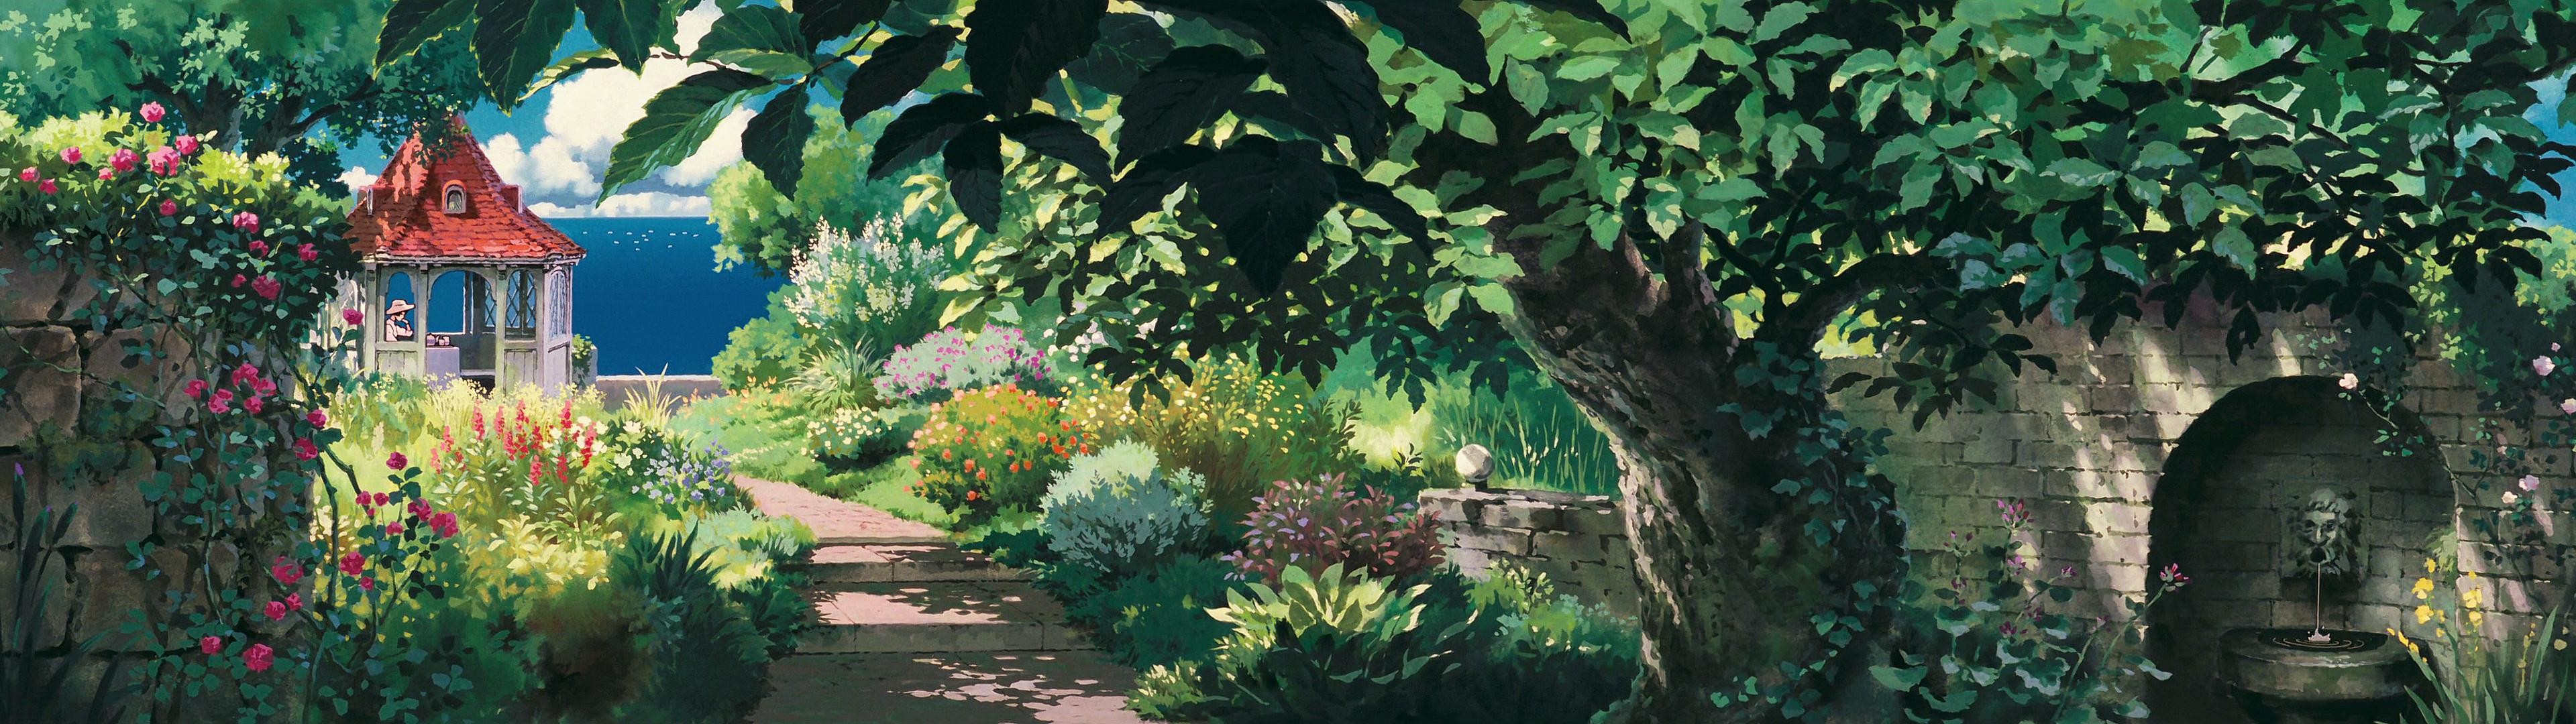 Studio Ghibli Porco Rosso Multiple Display Garden Gazebo Path 3840x1080